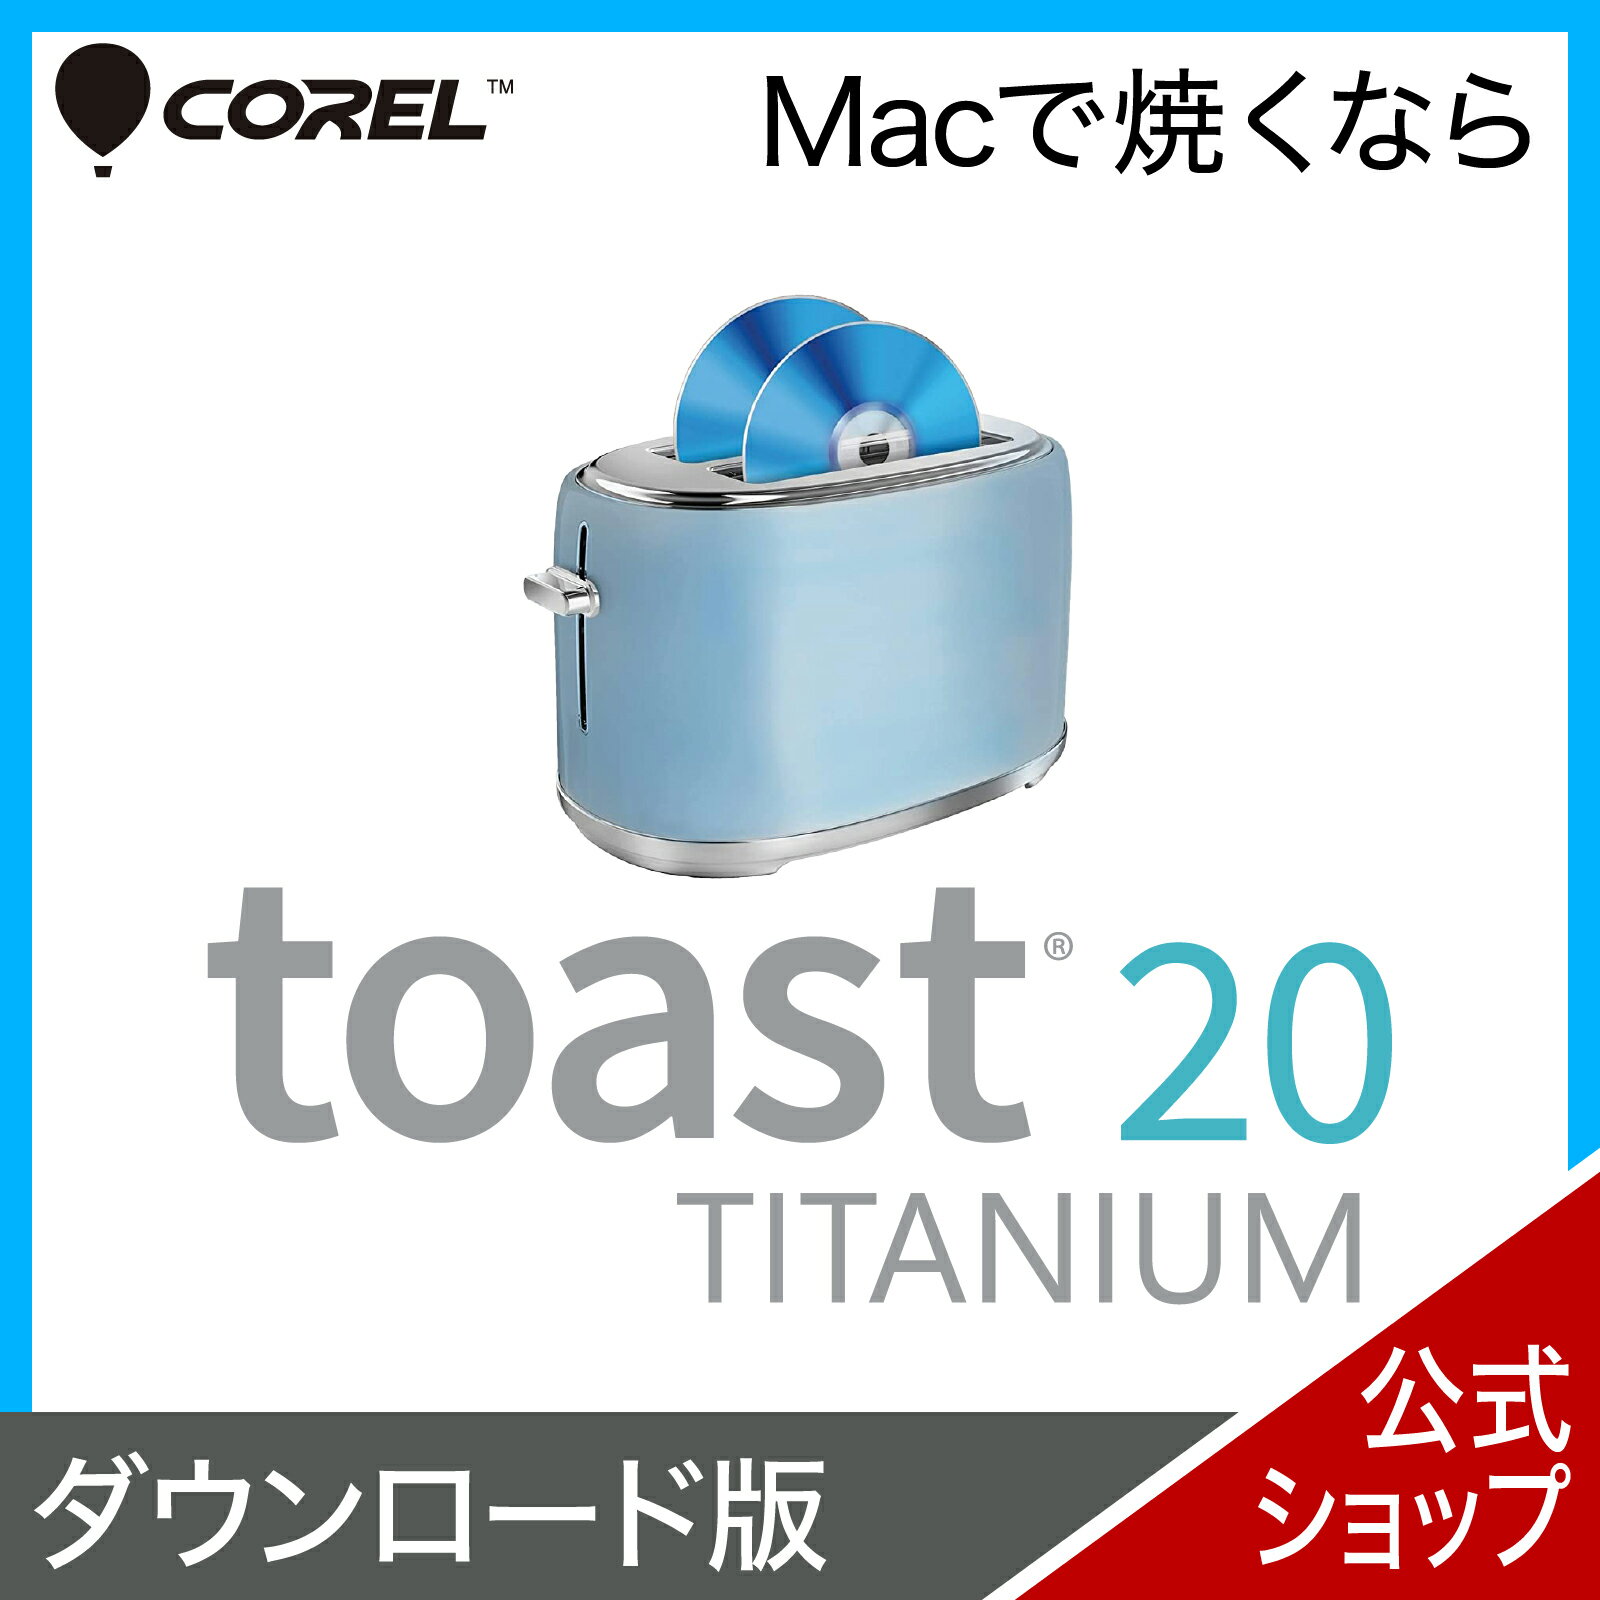 Toast 20 Titanium 【ダウンロード版】DL_SNR